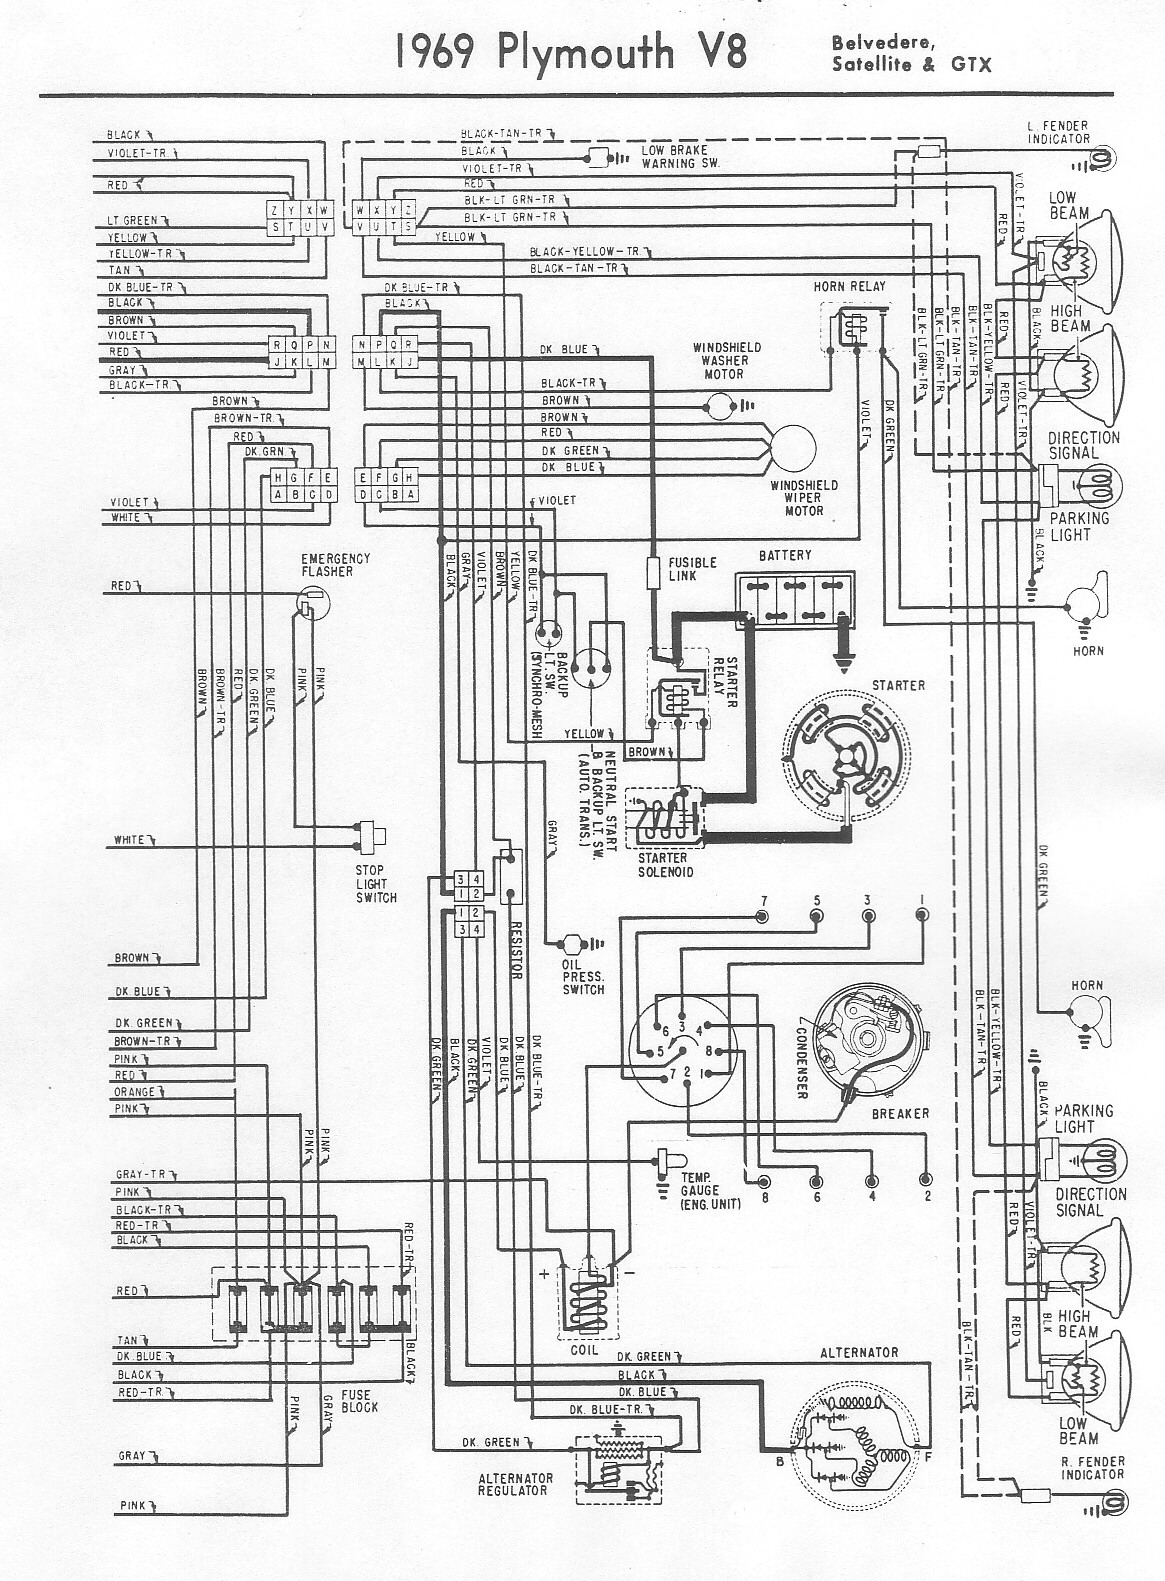 70 Mopar Wiring Diagram | Wiring Library - Mopar Wiring Diagram